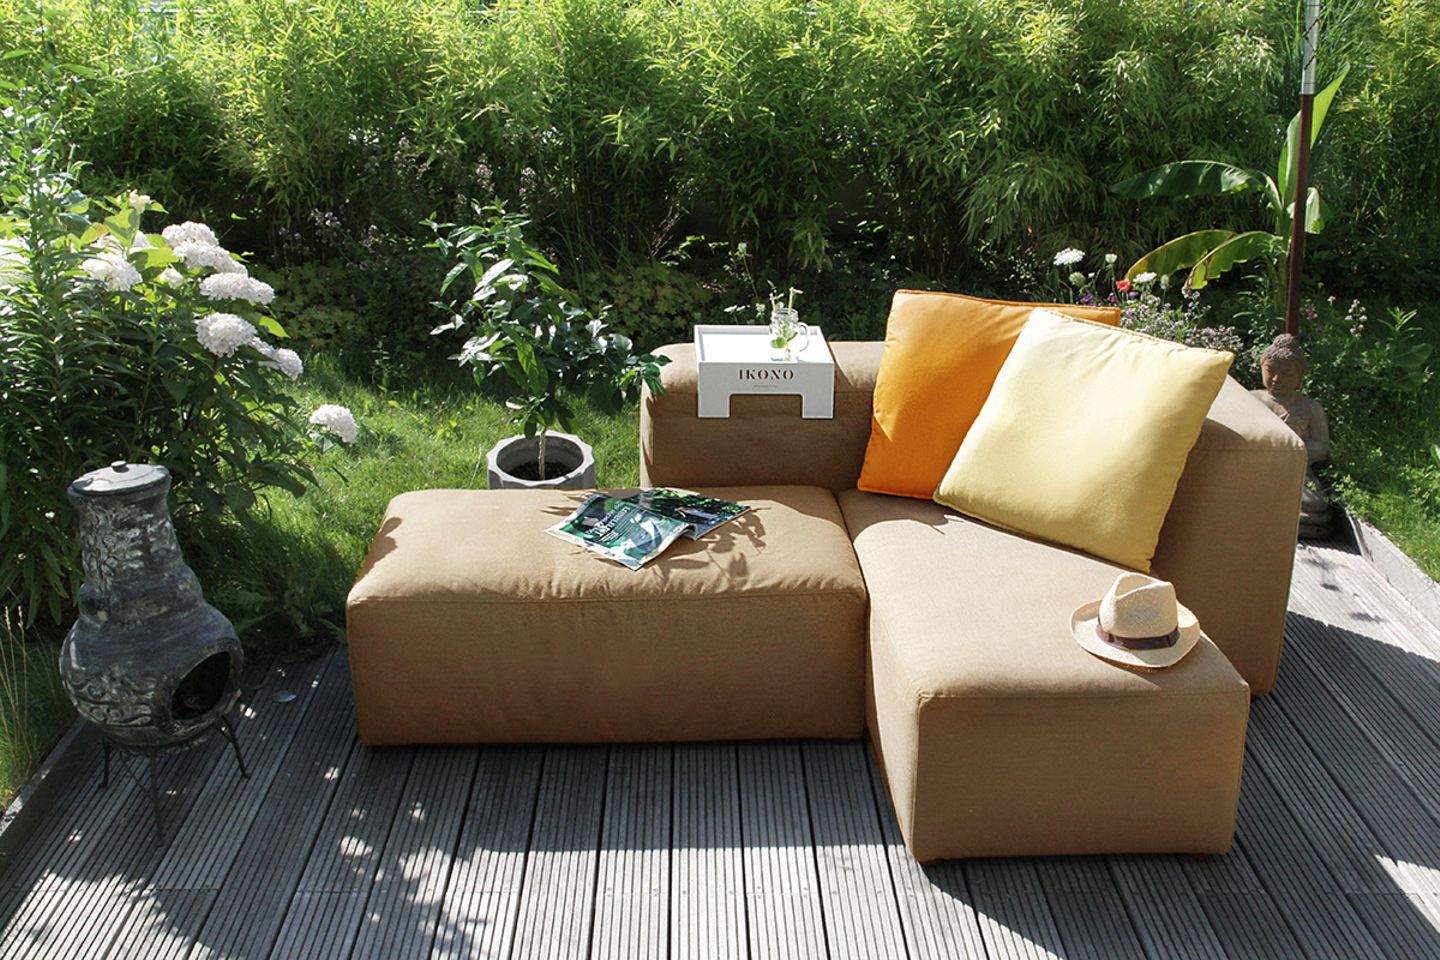 Outdoor-Sofa "Liberty" von Ikono